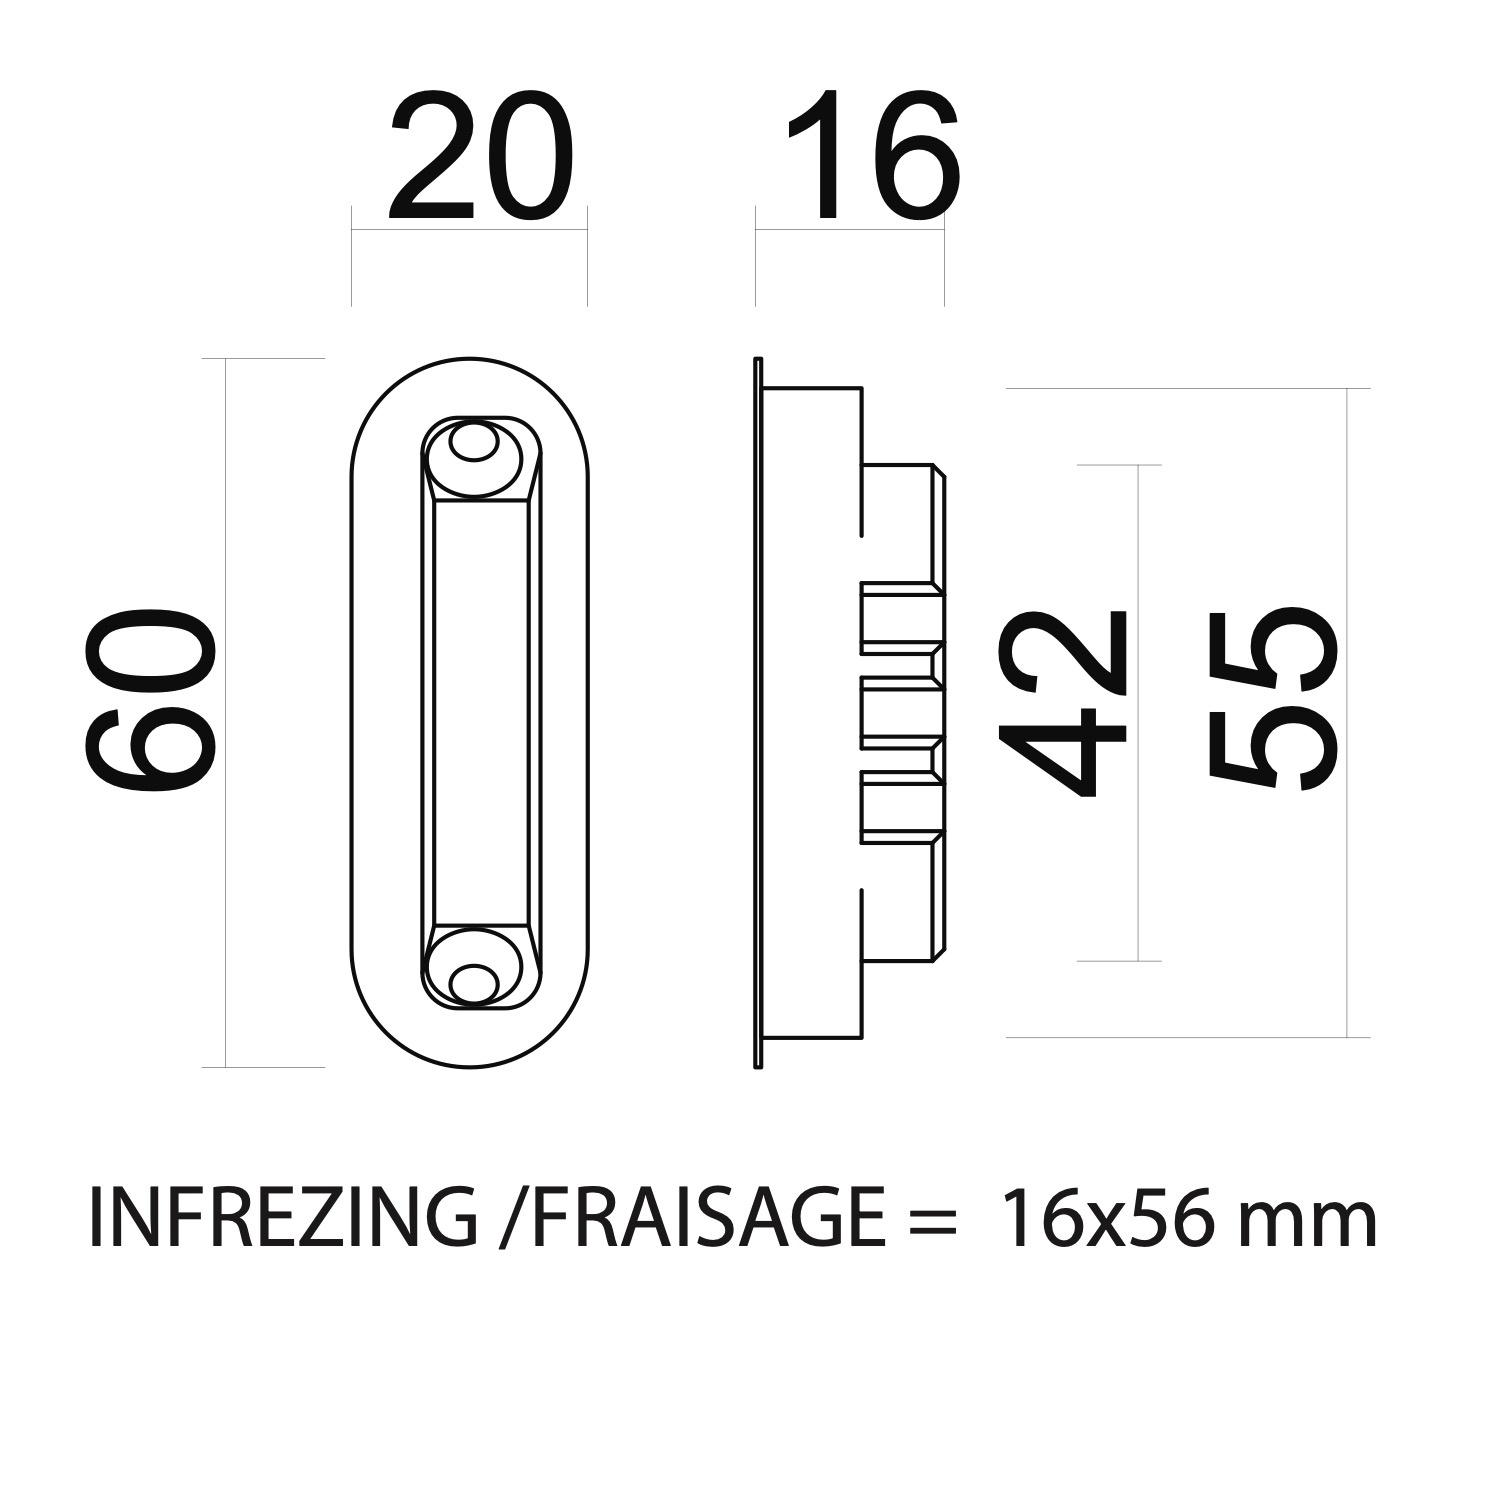 Plaque Inox Magnétique 1 mm